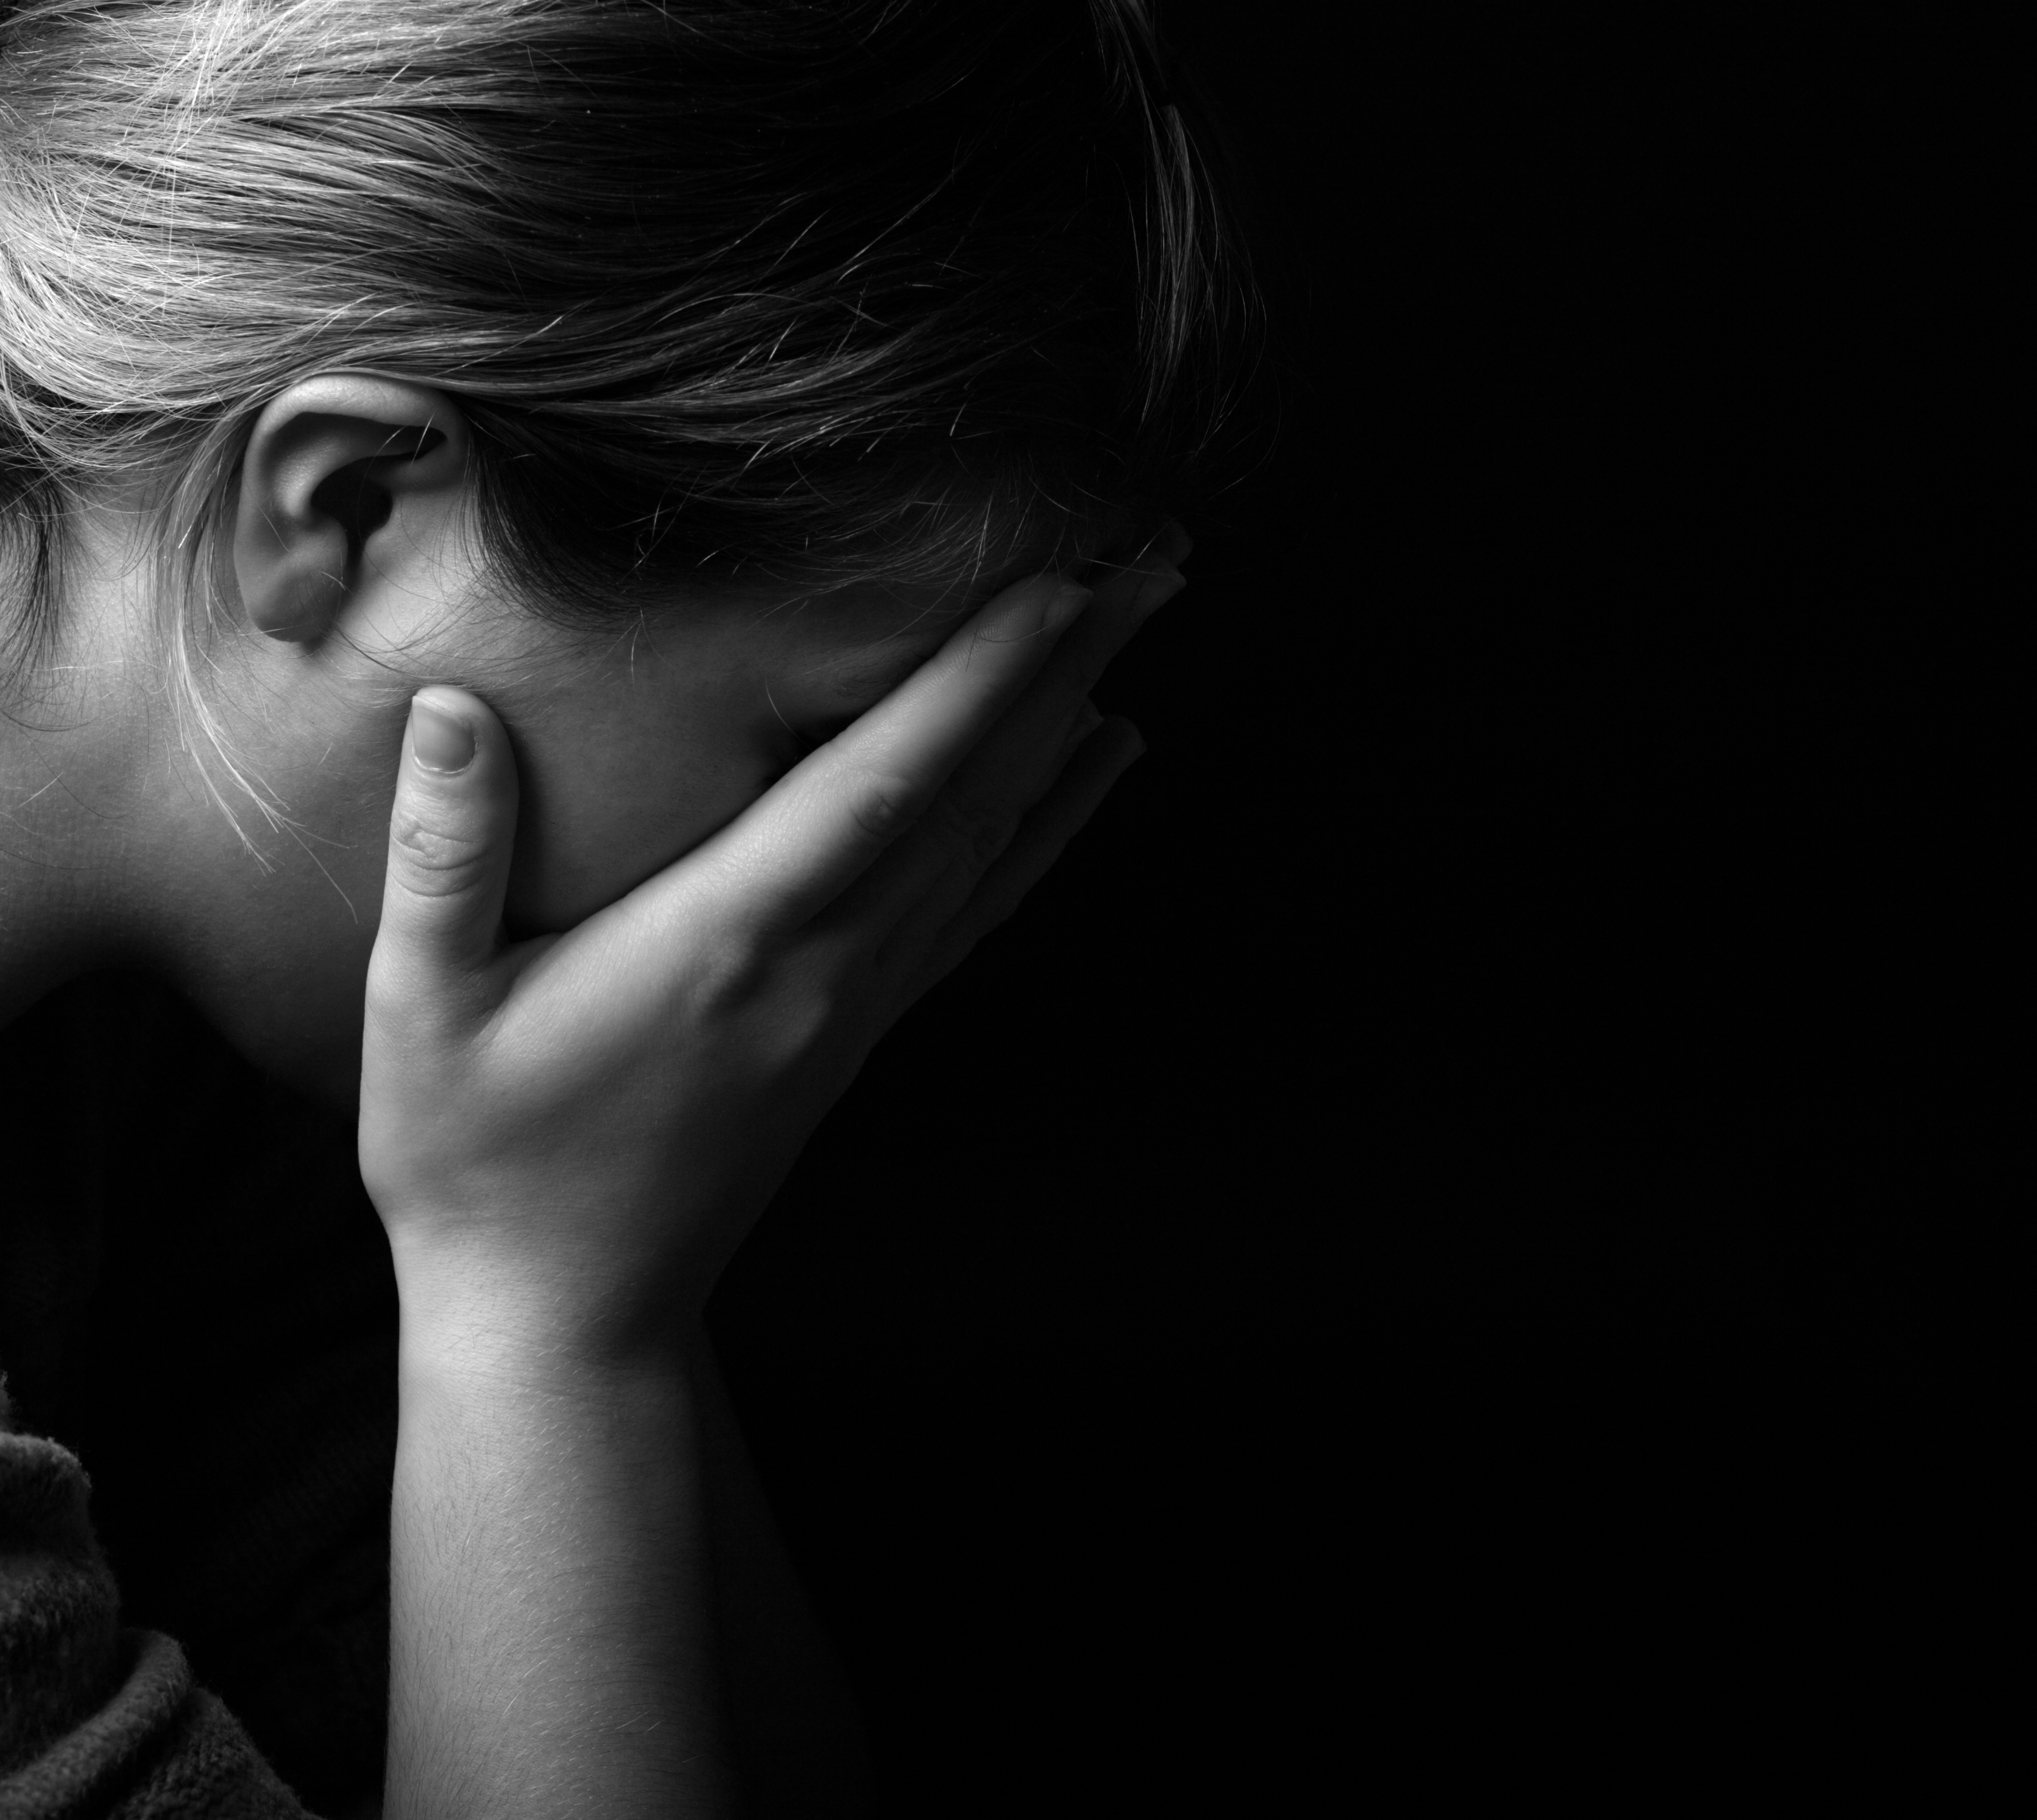 A woman in despair | Source: Shutterstock